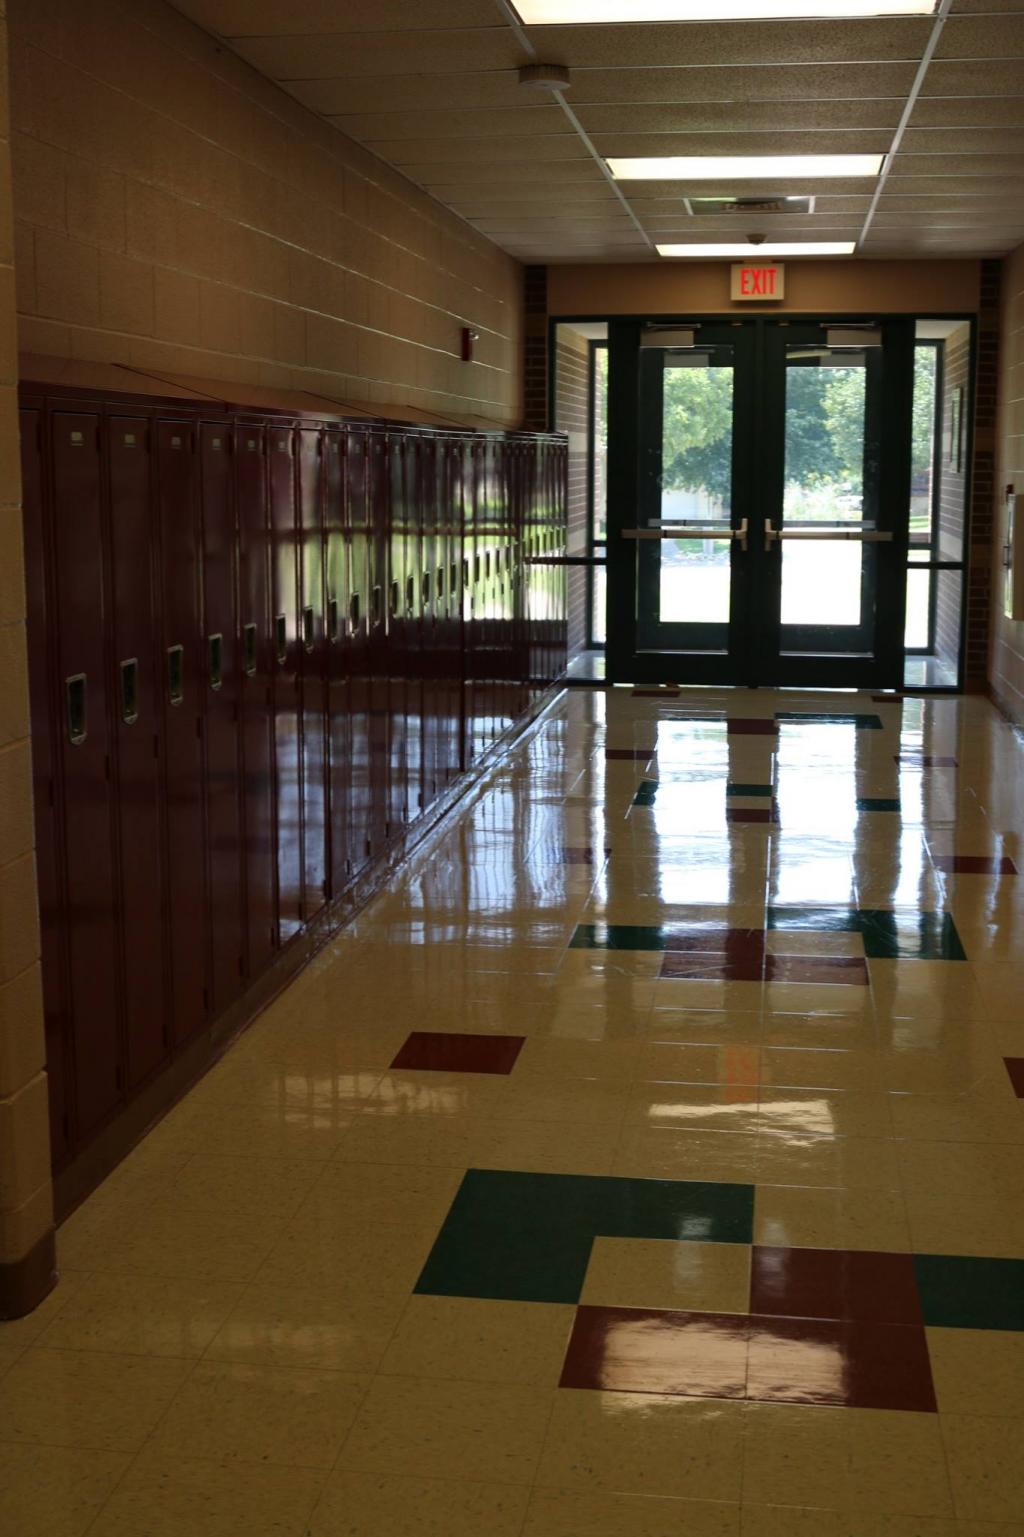 A photo of lockers in the school hallway